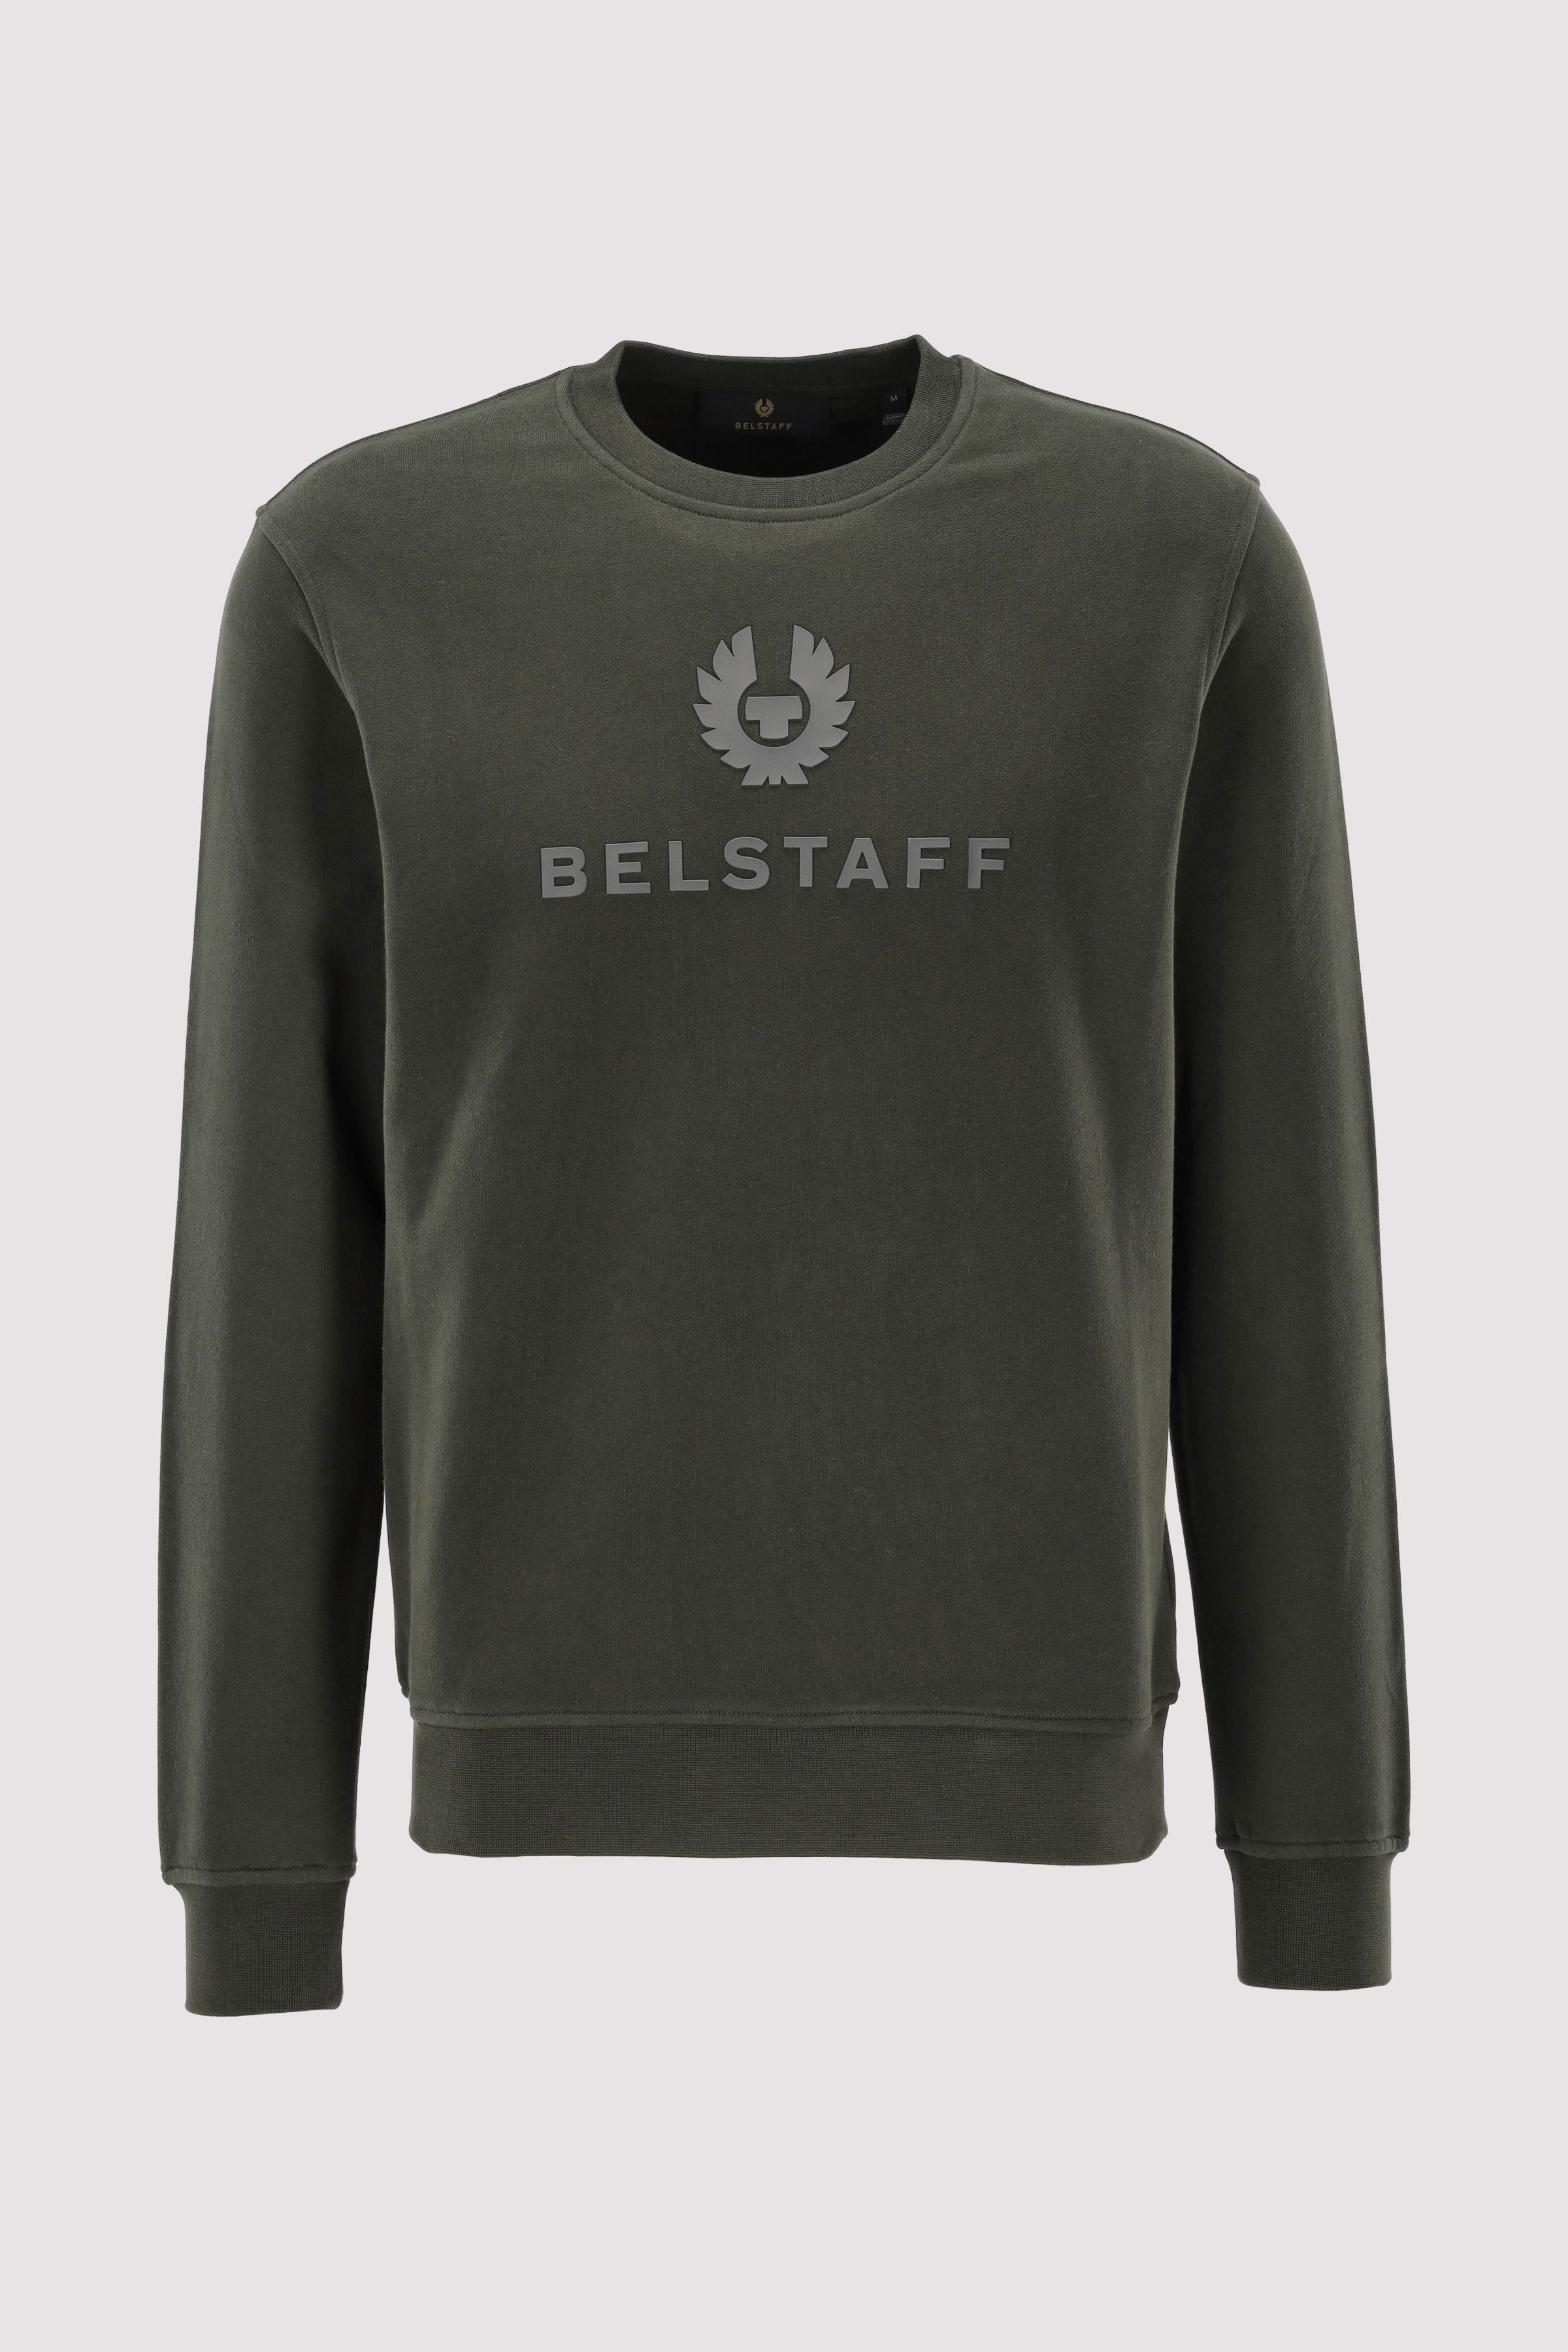 Belstaff Signature Sweatshirt